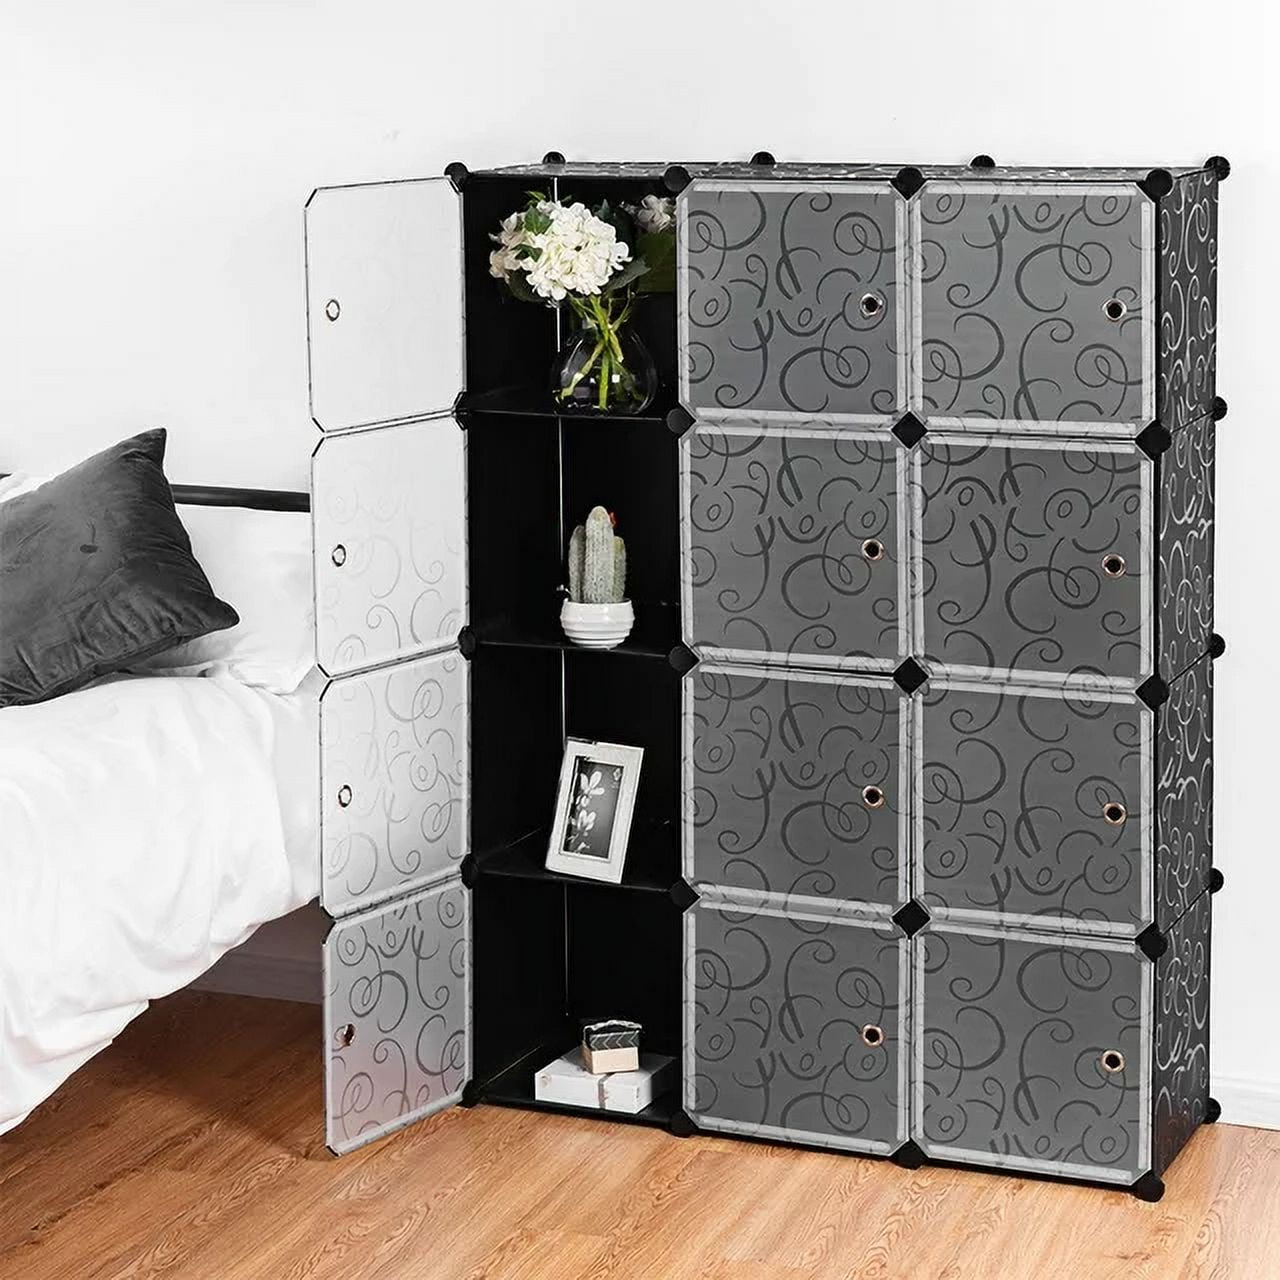 12-Cube Storage Shelves with Doors, Modular Book Shelf Organizer Units, Plastic Clothing Storage Containers, Closet Cube Storage&Organizatier